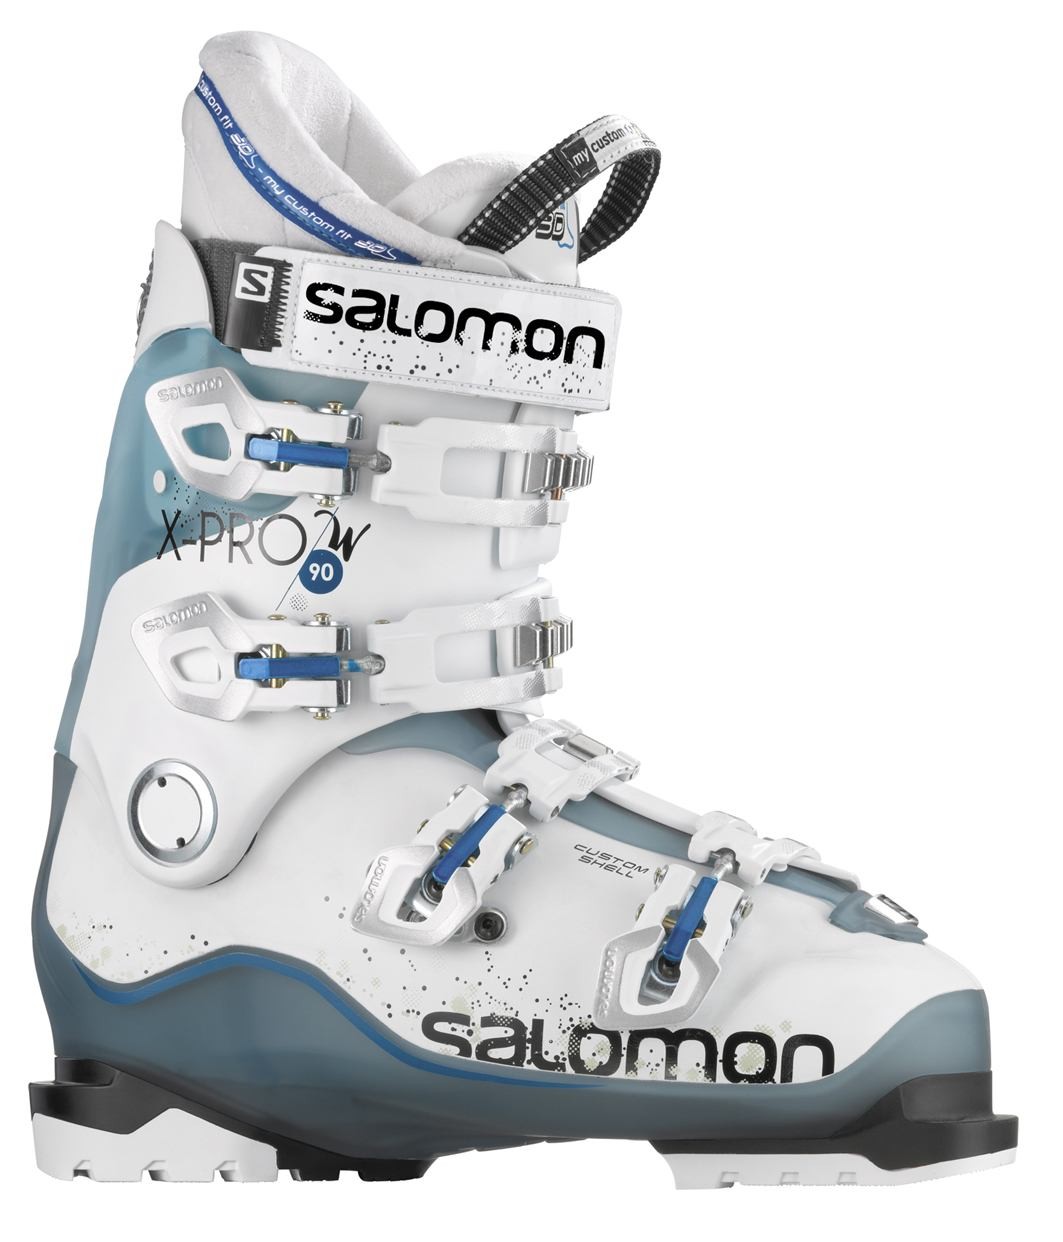 Salomon X Pro 90 women's ski boot